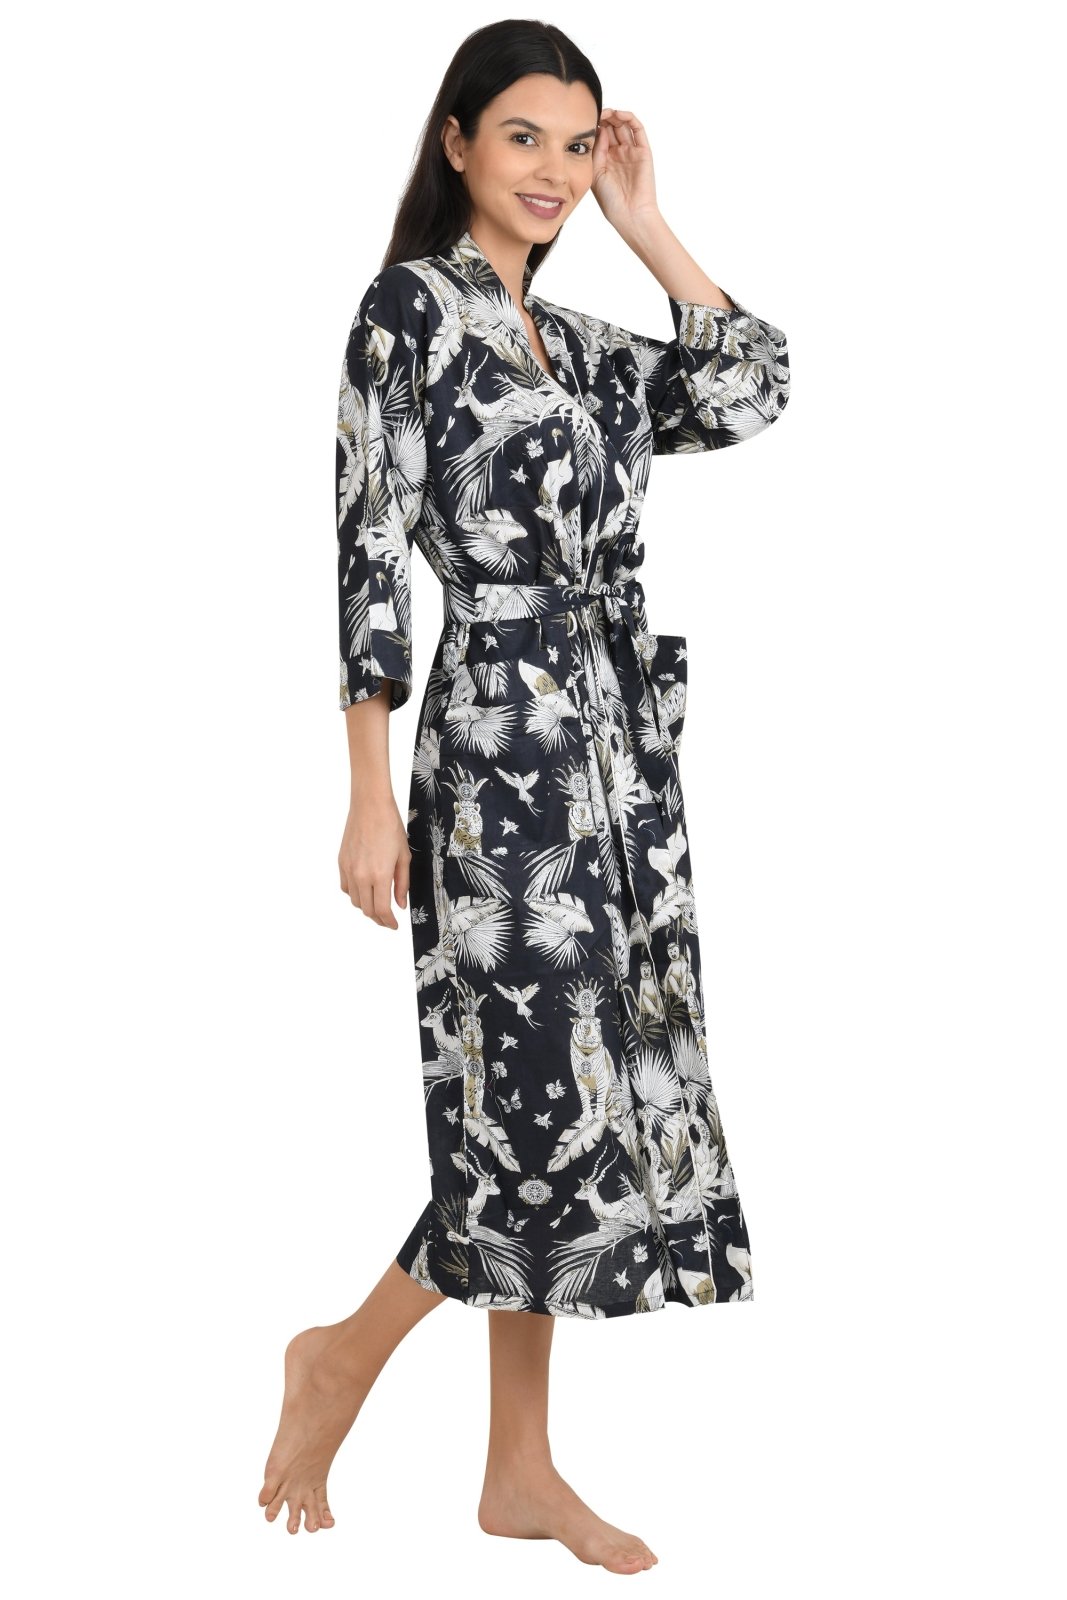 Boho Cotton Kimono House Robe Indian Handprinted Jungle Print Pattern | Lightweight Summer Luxury Beach Holidays Yacht Cover Up Stunning Dress - The Eastern Loom